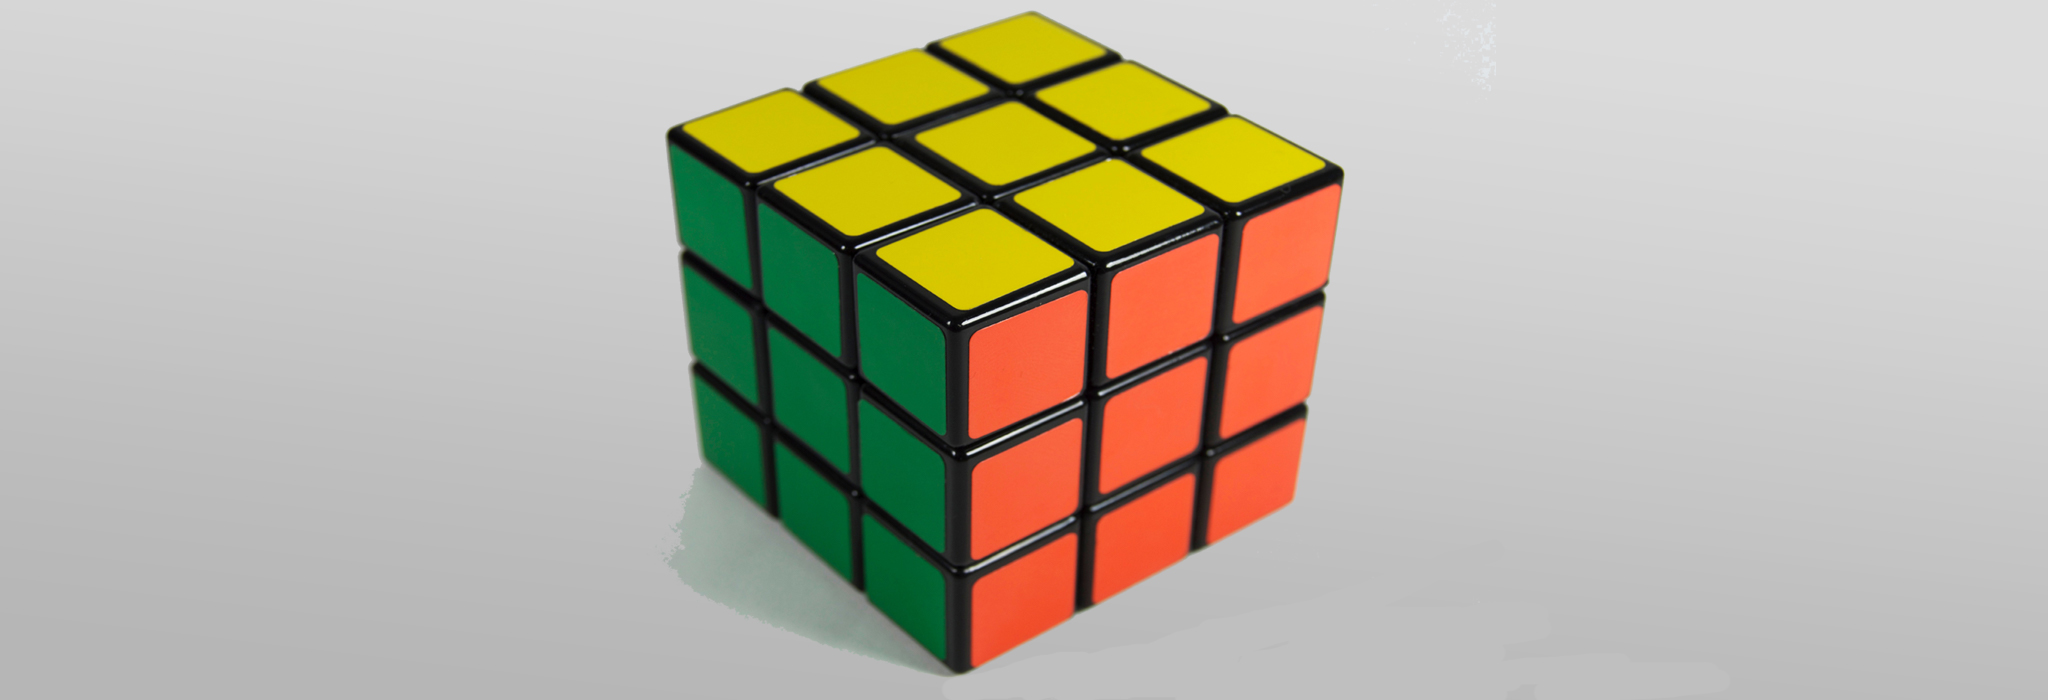 rubic-cube-ssd-designs